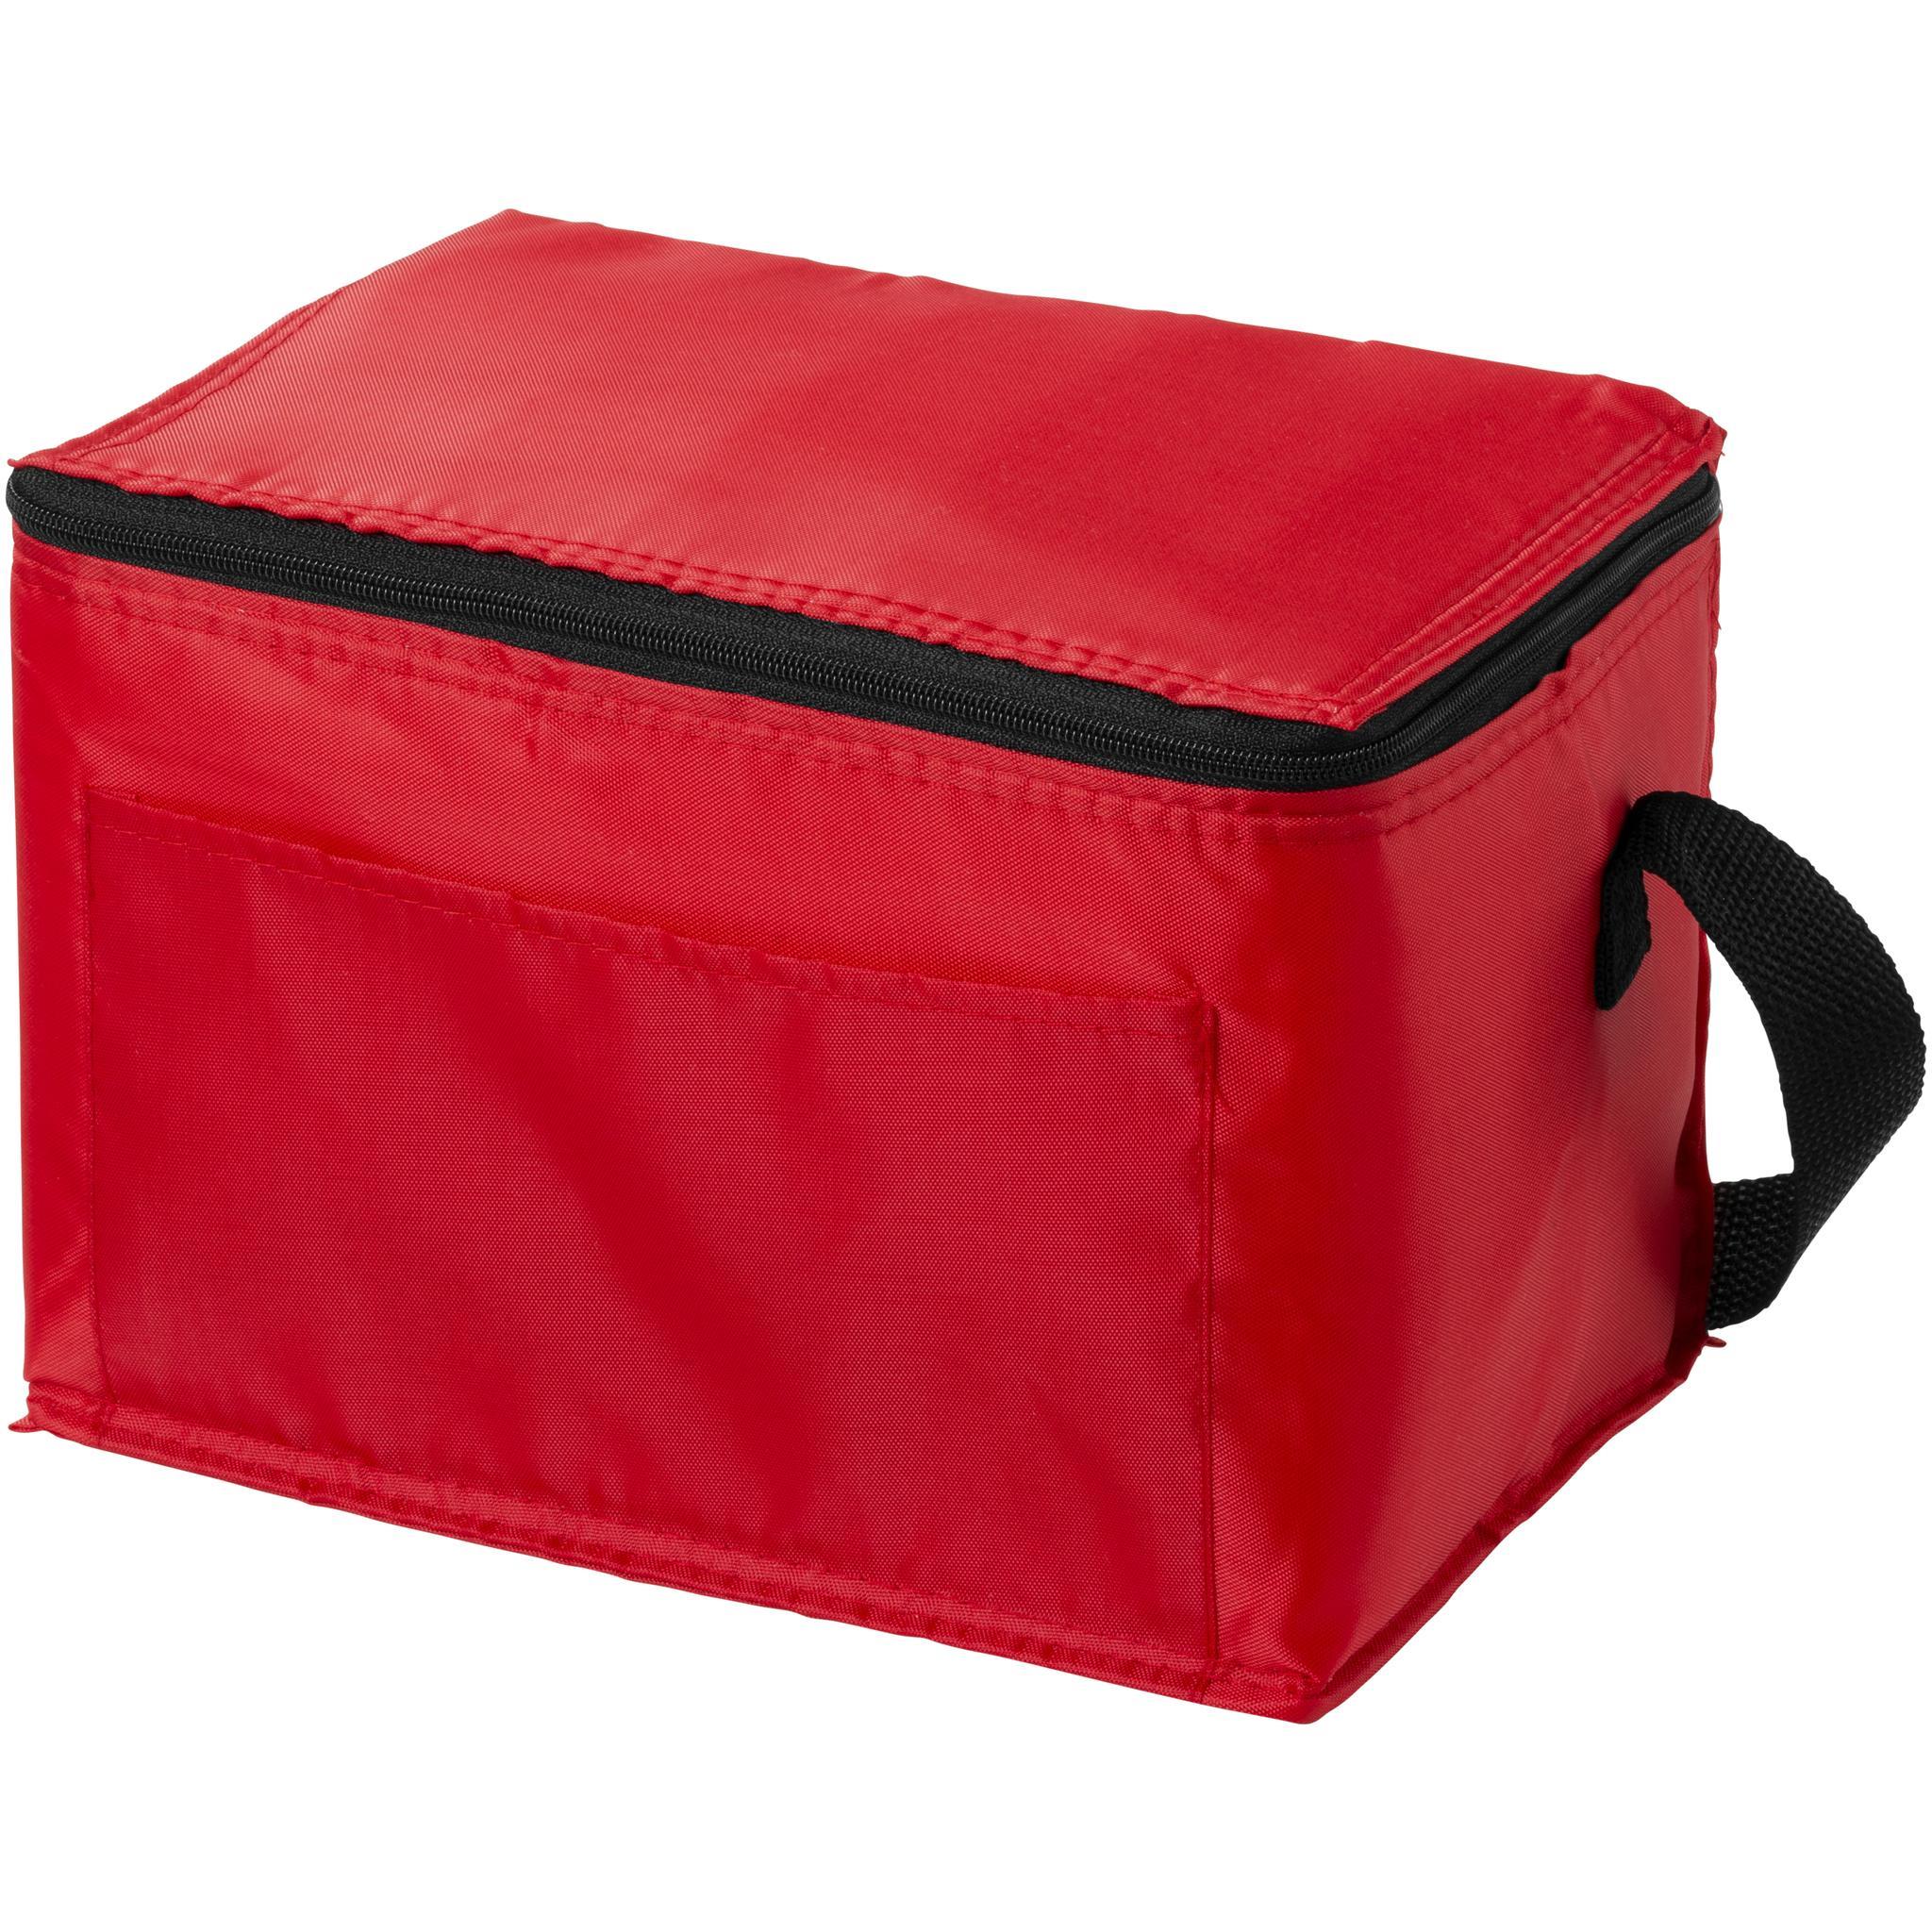 Bullet Kumla Lunch Cooler Bag (Red) (20.3 x 15.2 x 15.2 cm)